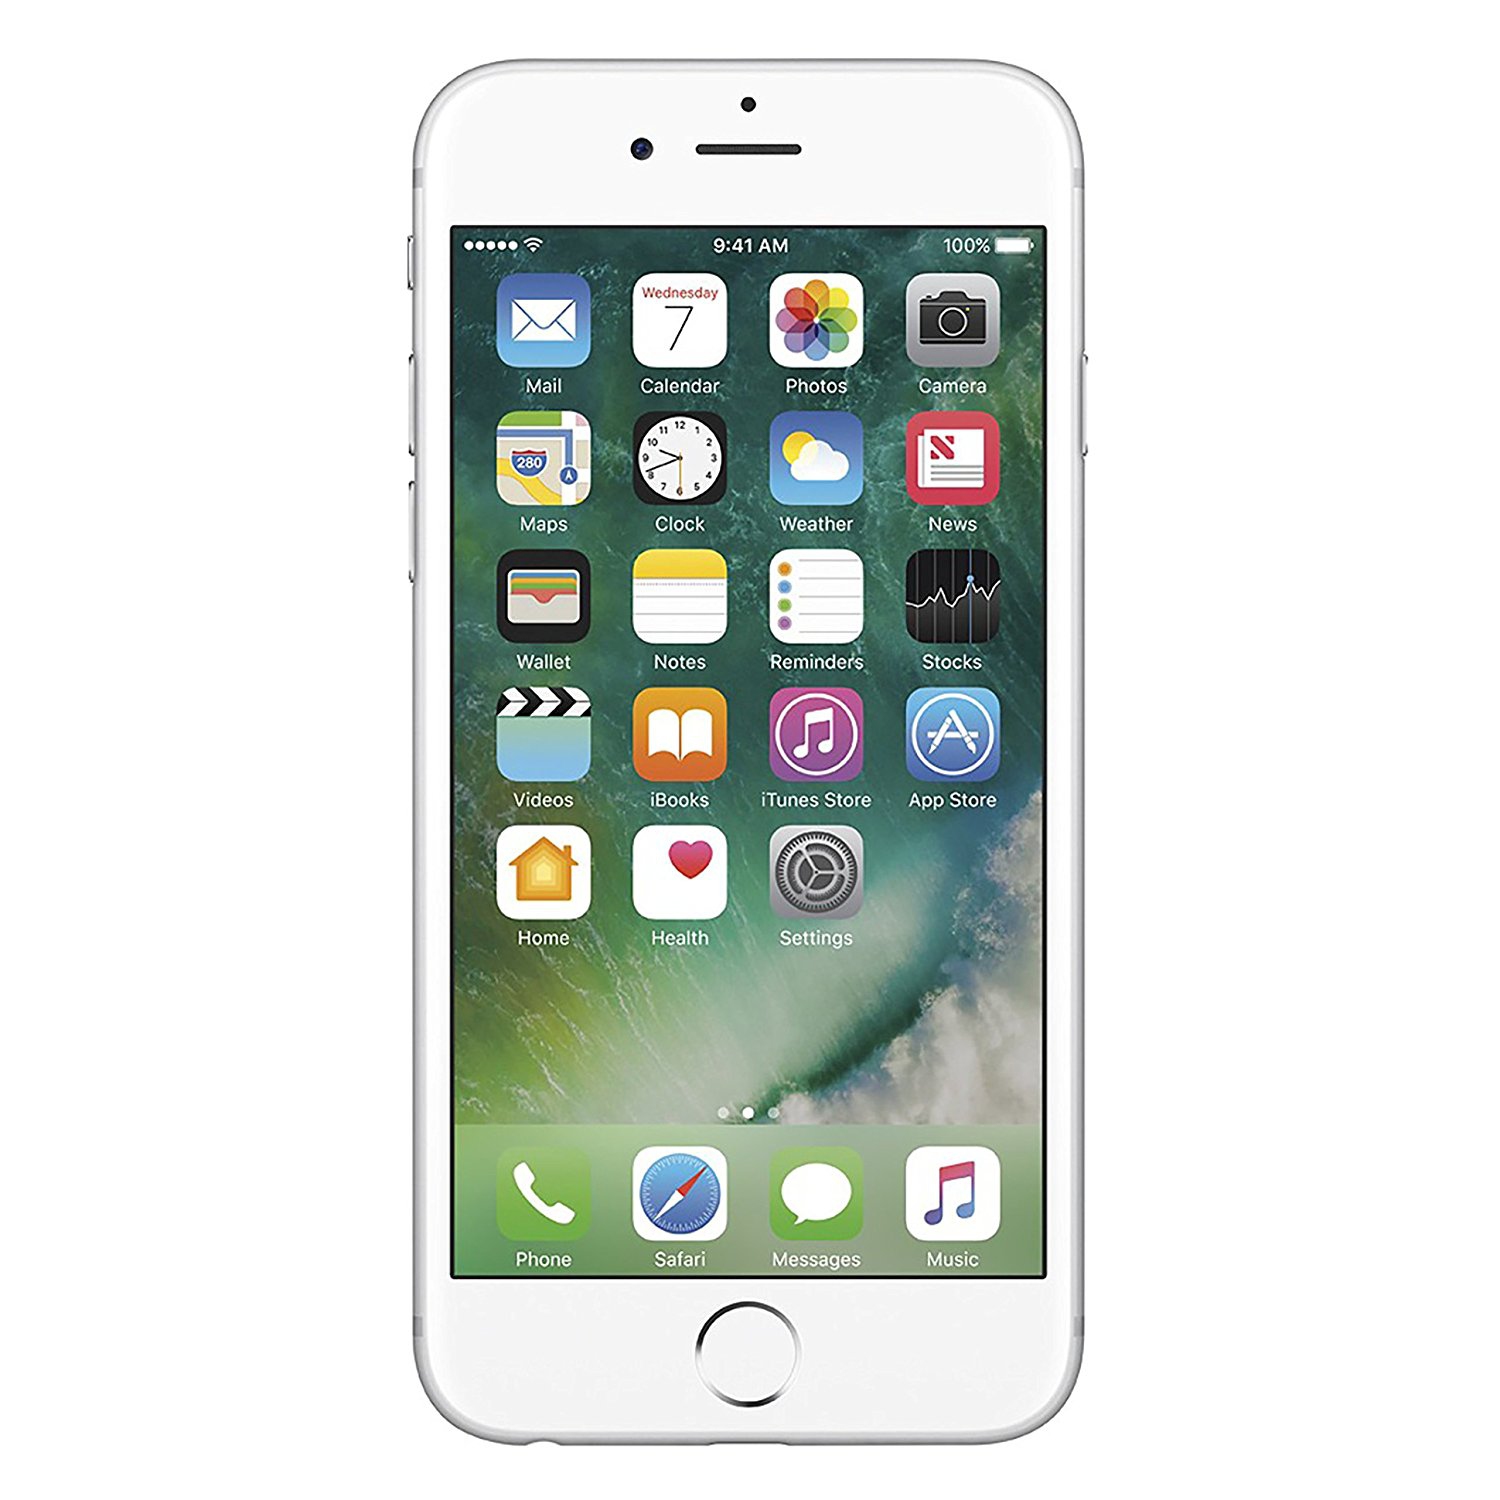 Refurbished (Excellent) - Apple iPhone 6s 32GB Smartphone - Silver - Unlocked - Certified Refurbished